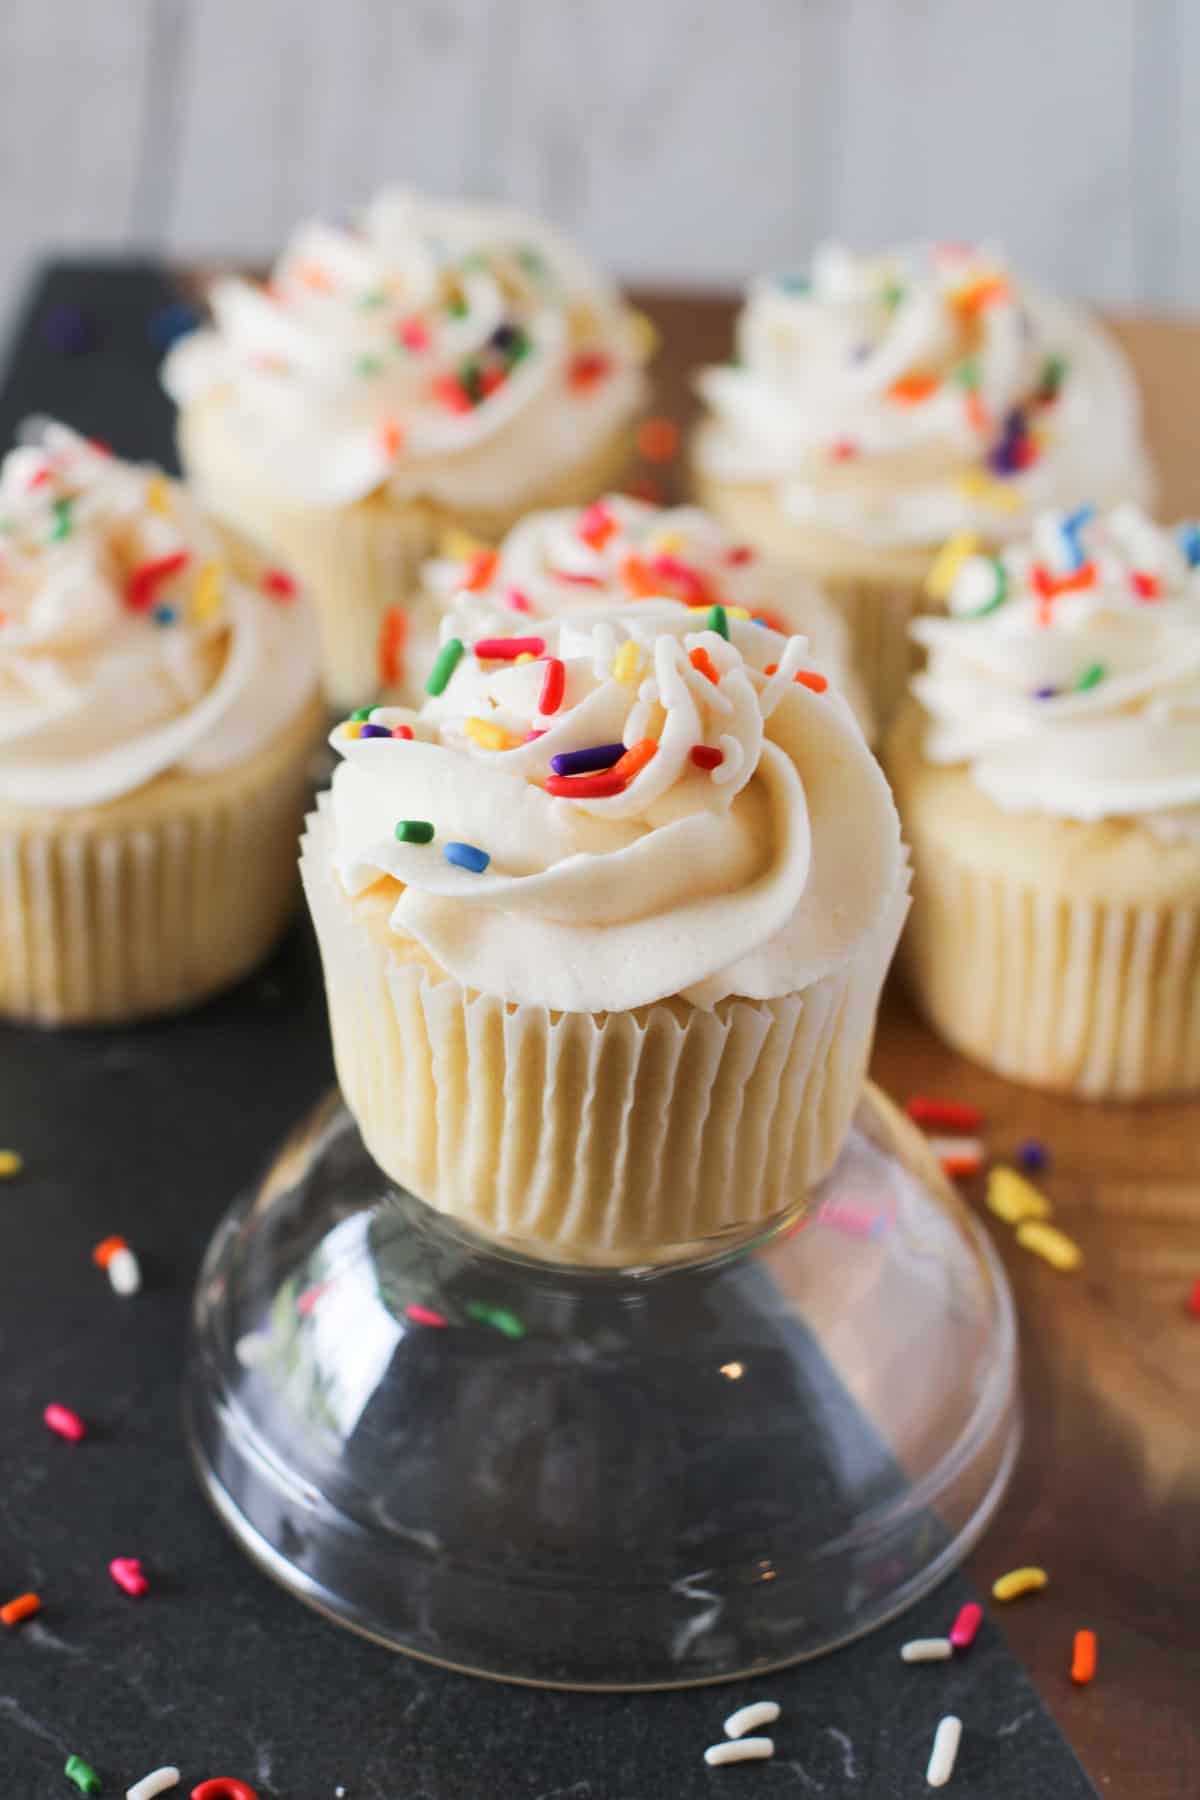 Decorated vanilla cupcakes.